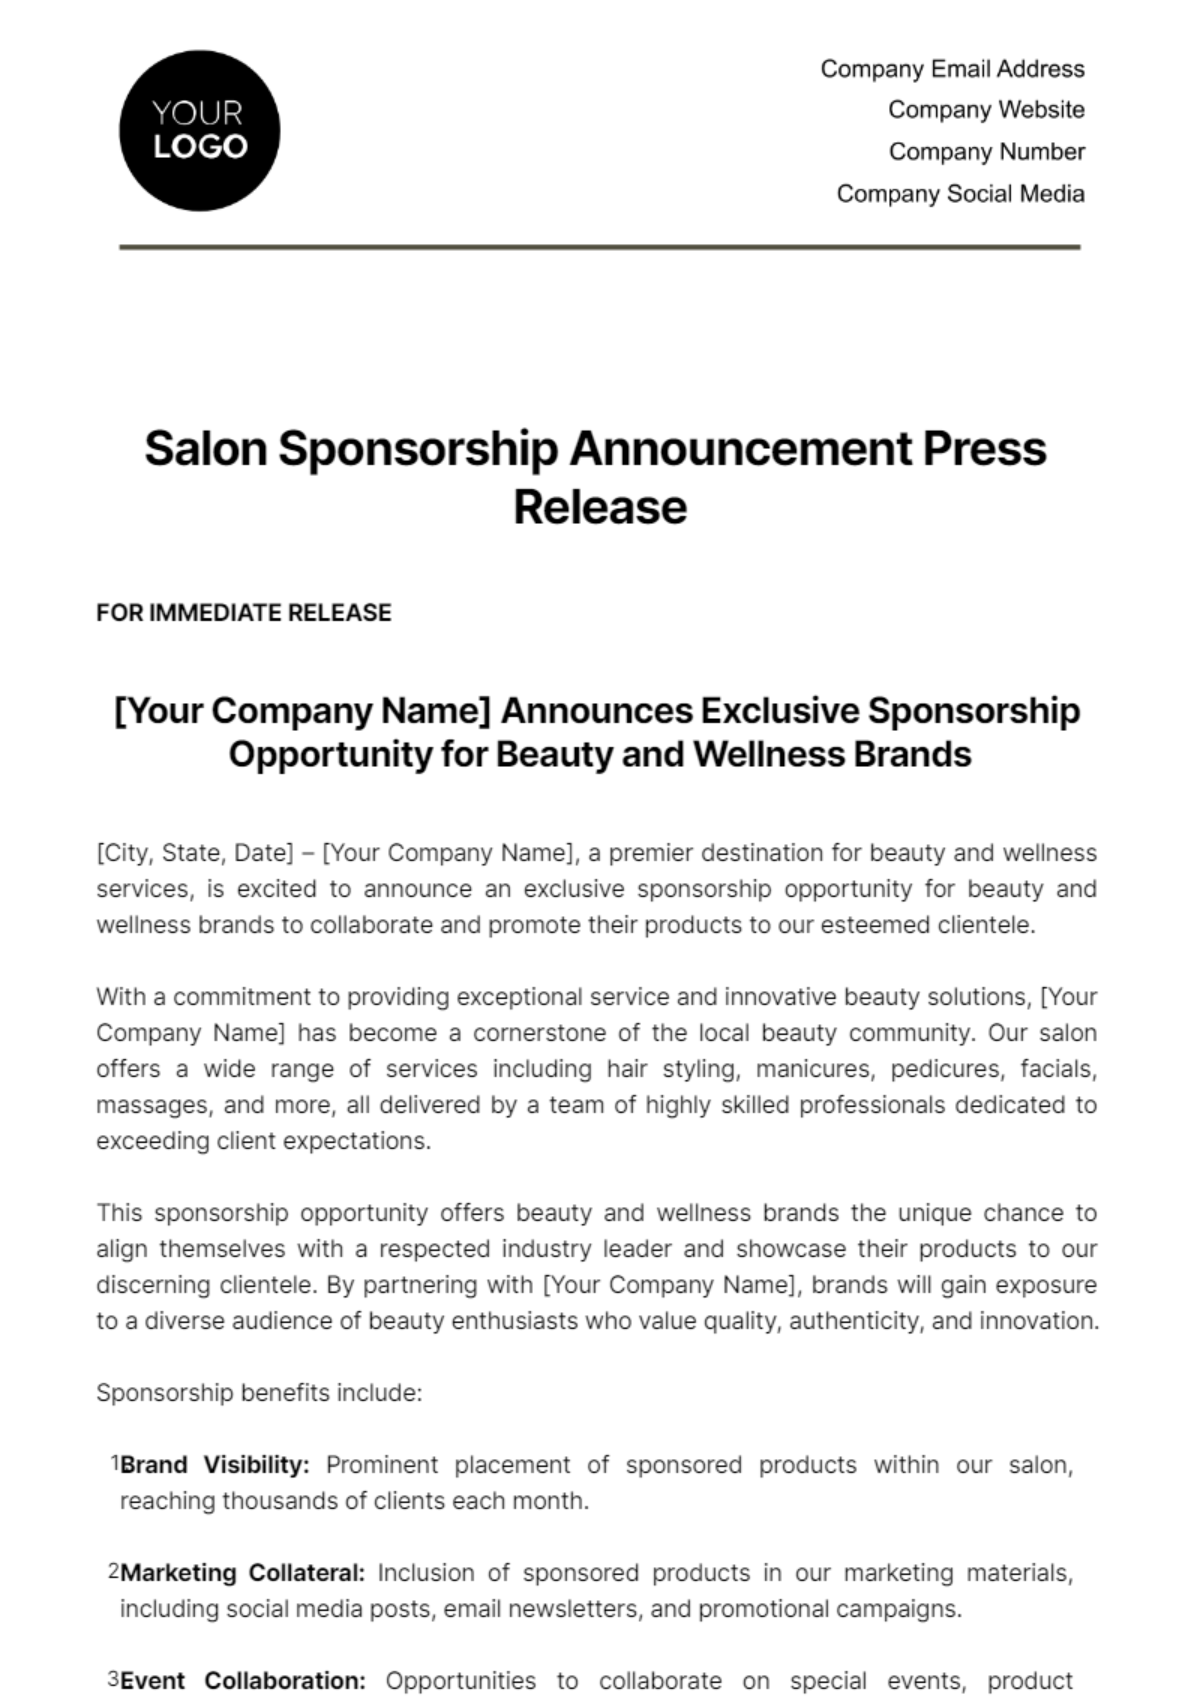 Salon Sponsorship Announcement Press Release Template